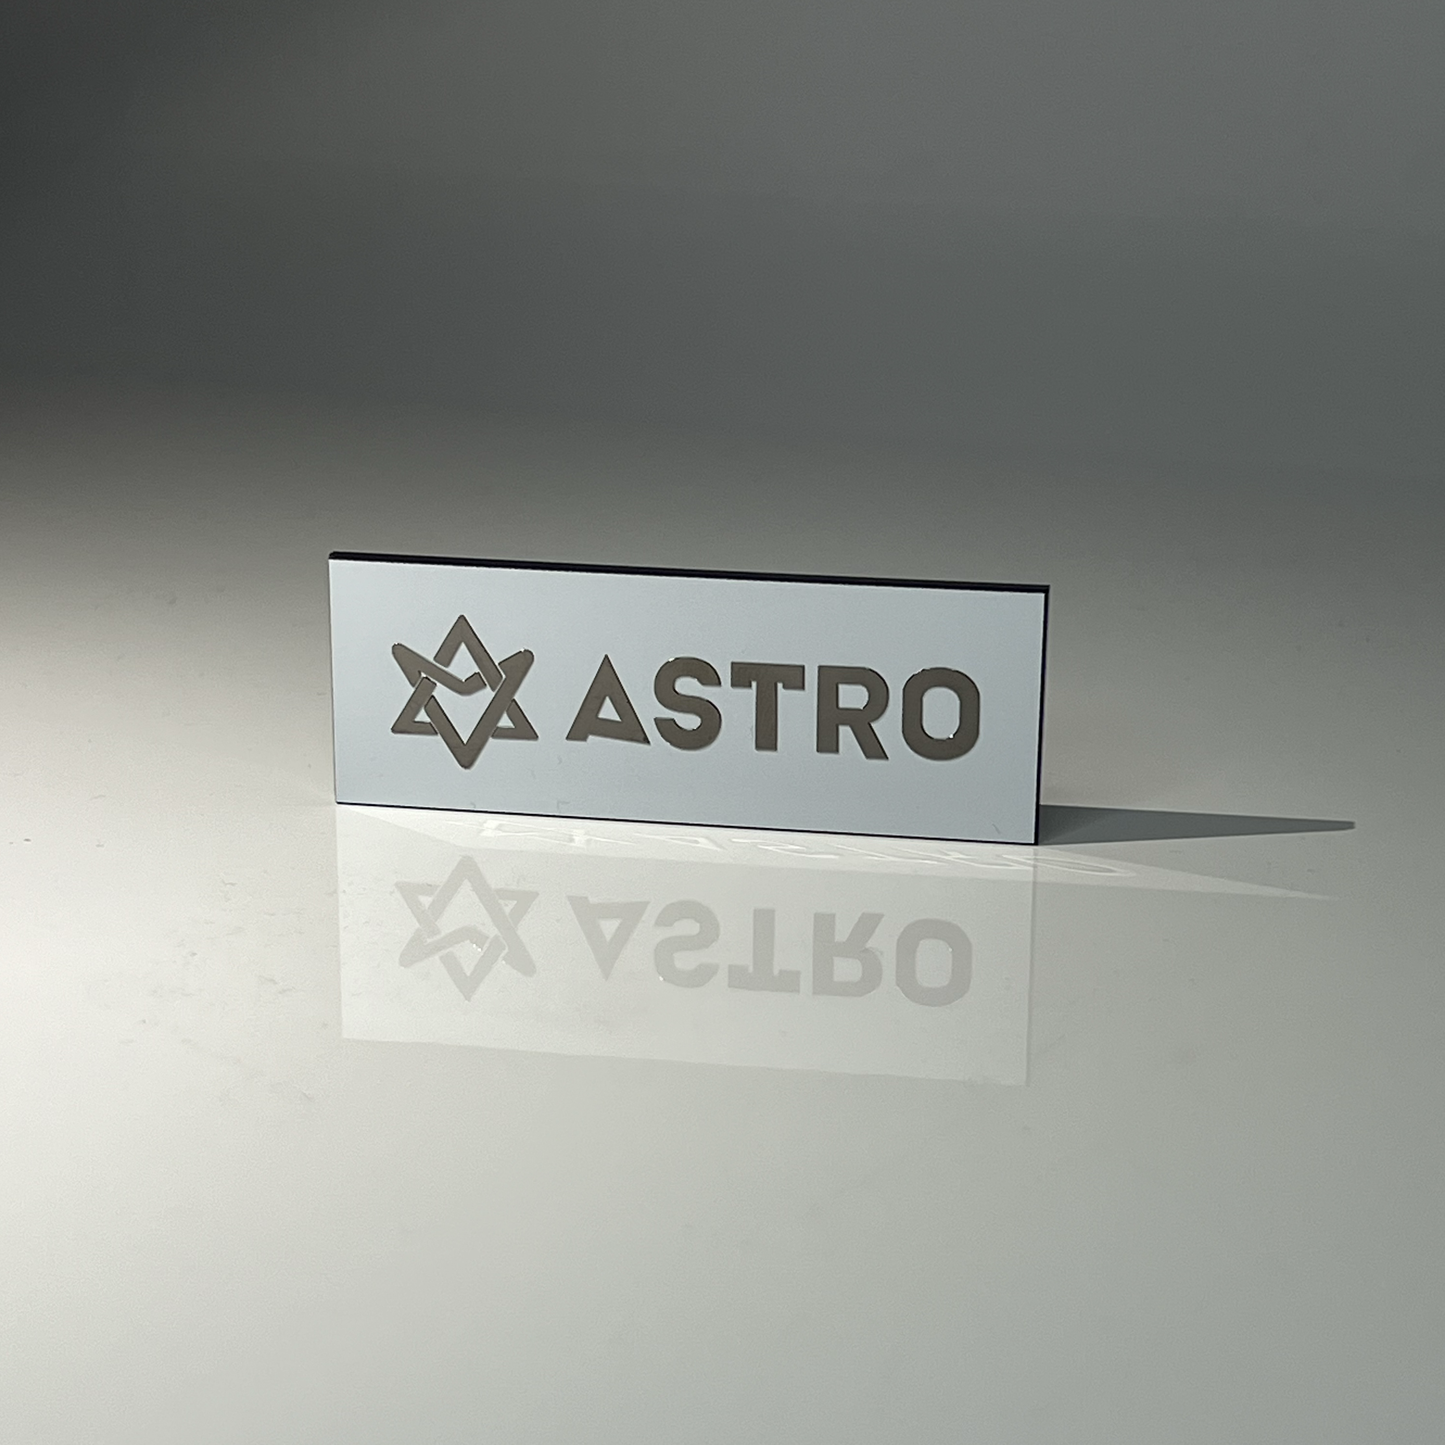 Astro Name Badge